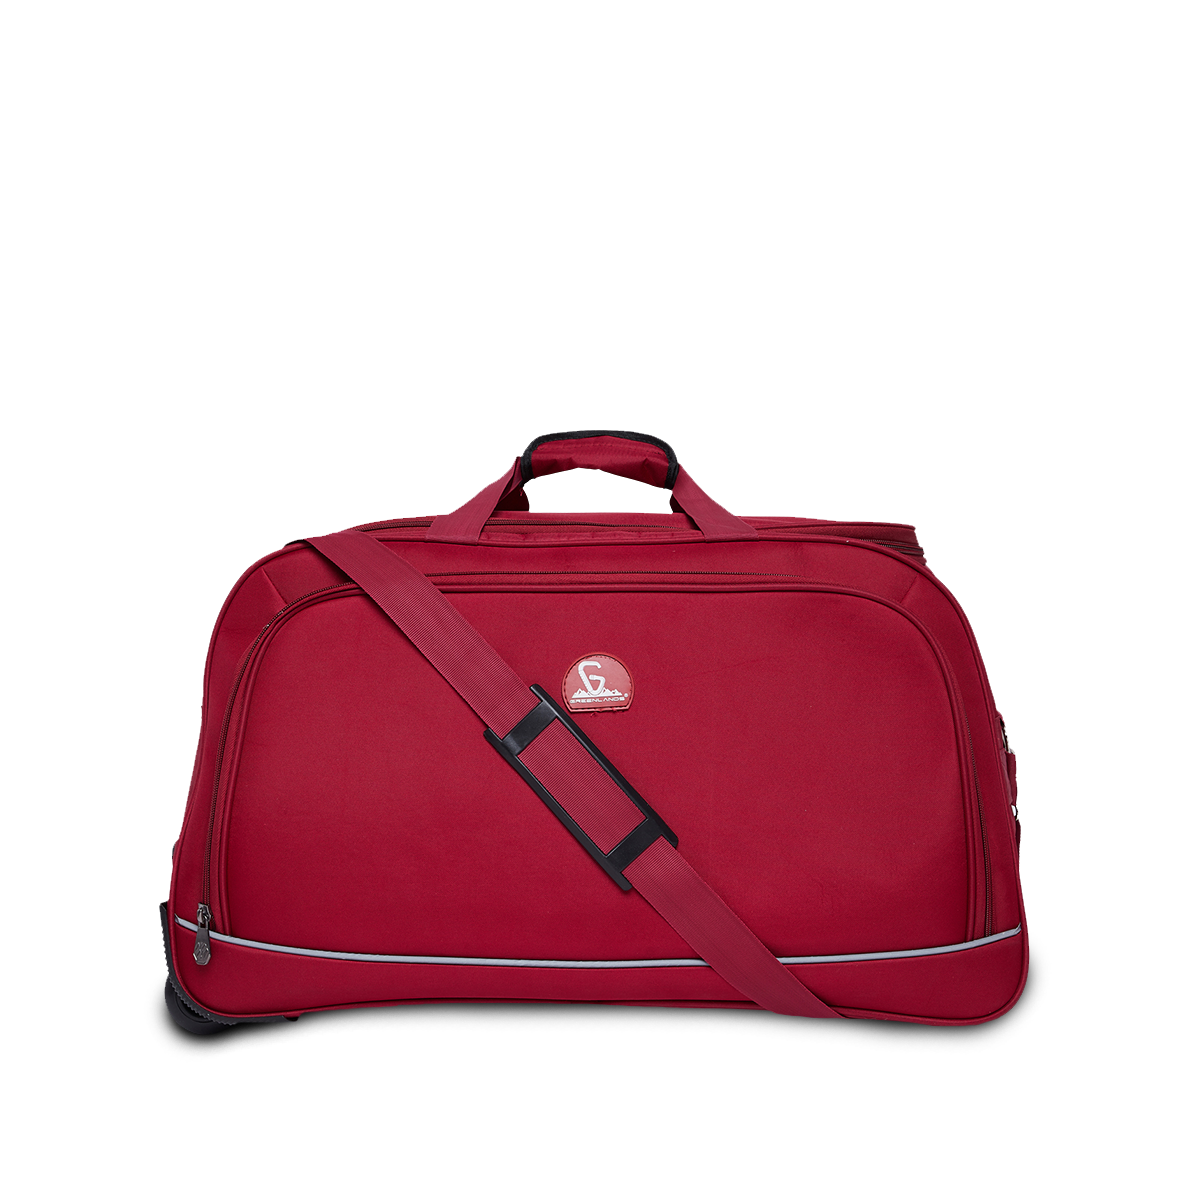 Nifty XL Duffle Bag Red 60 ltr